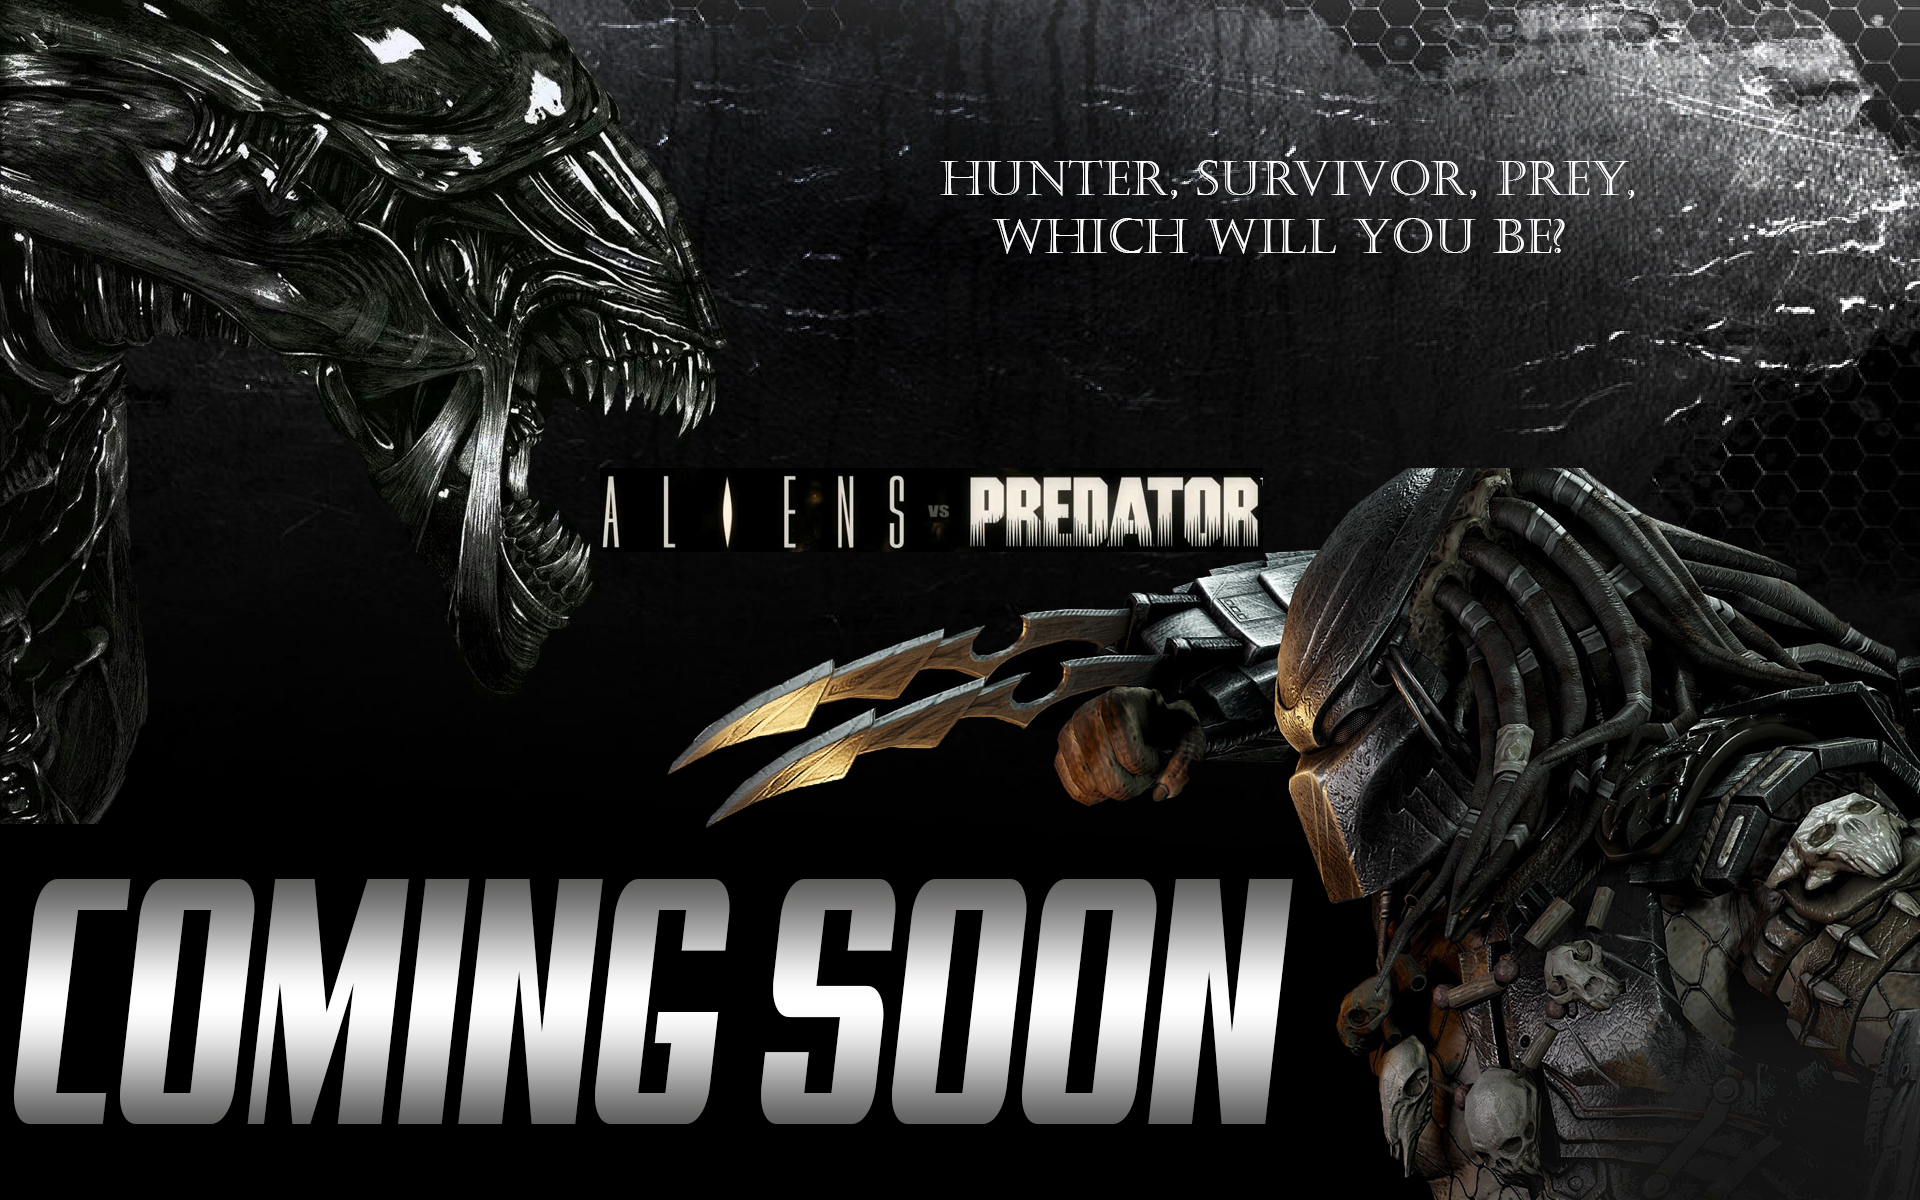 Nova Predator cs go skin download the last version for android